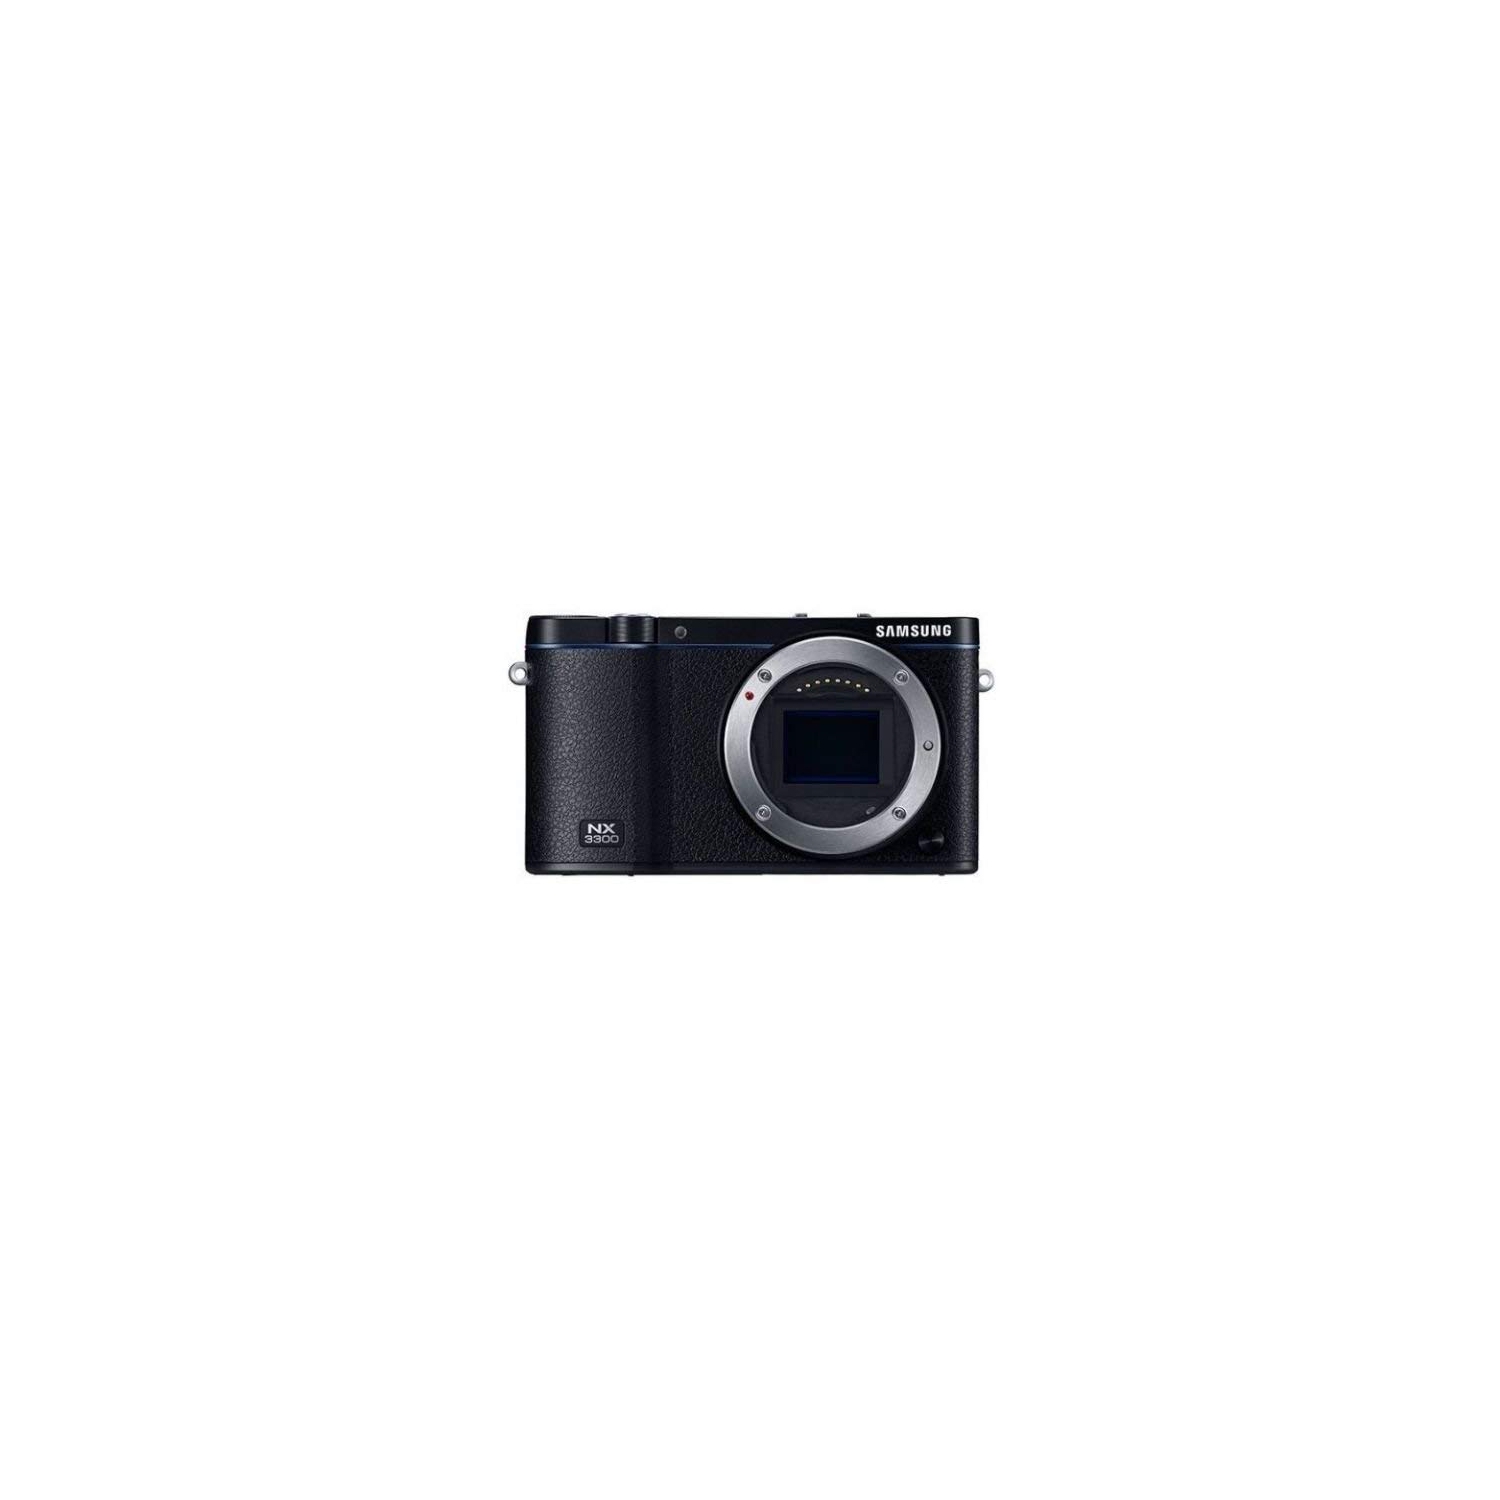 Samsung NX3300 Mirrorless Digital Camera (Black Body Only) (International Model) No Warranty